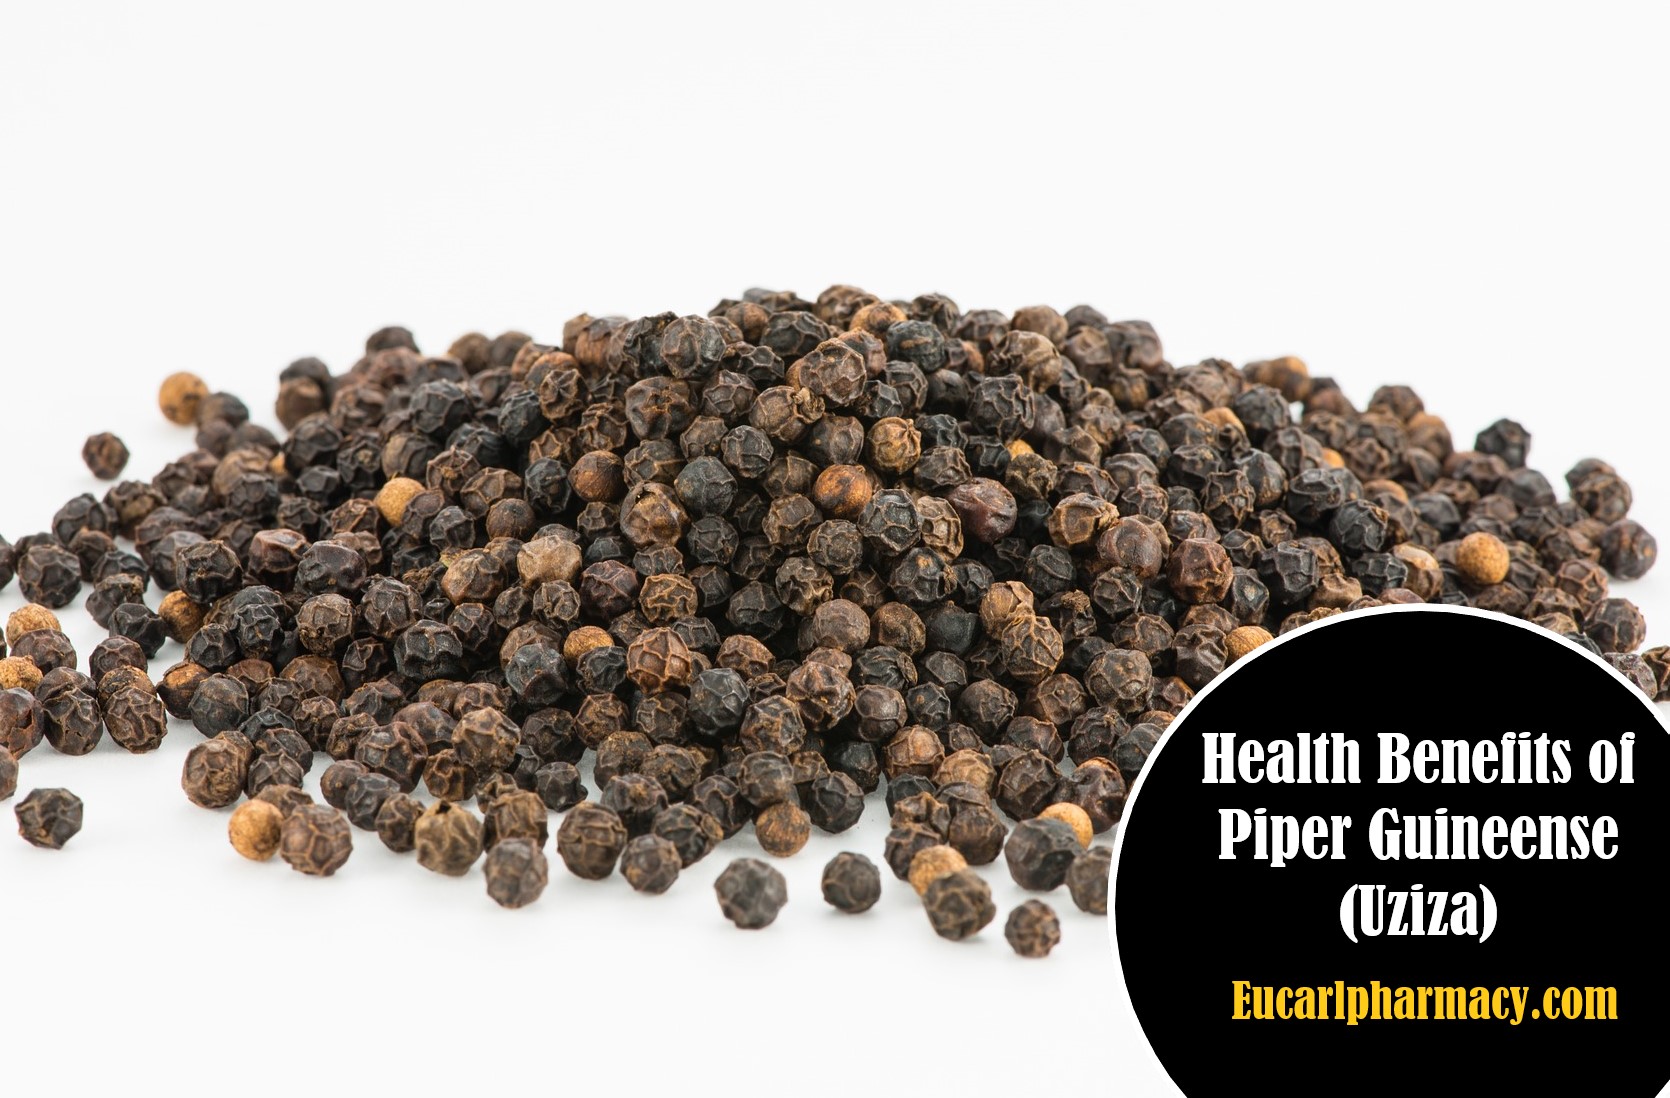 Health Benefits of Piper Guineense (Uziza)